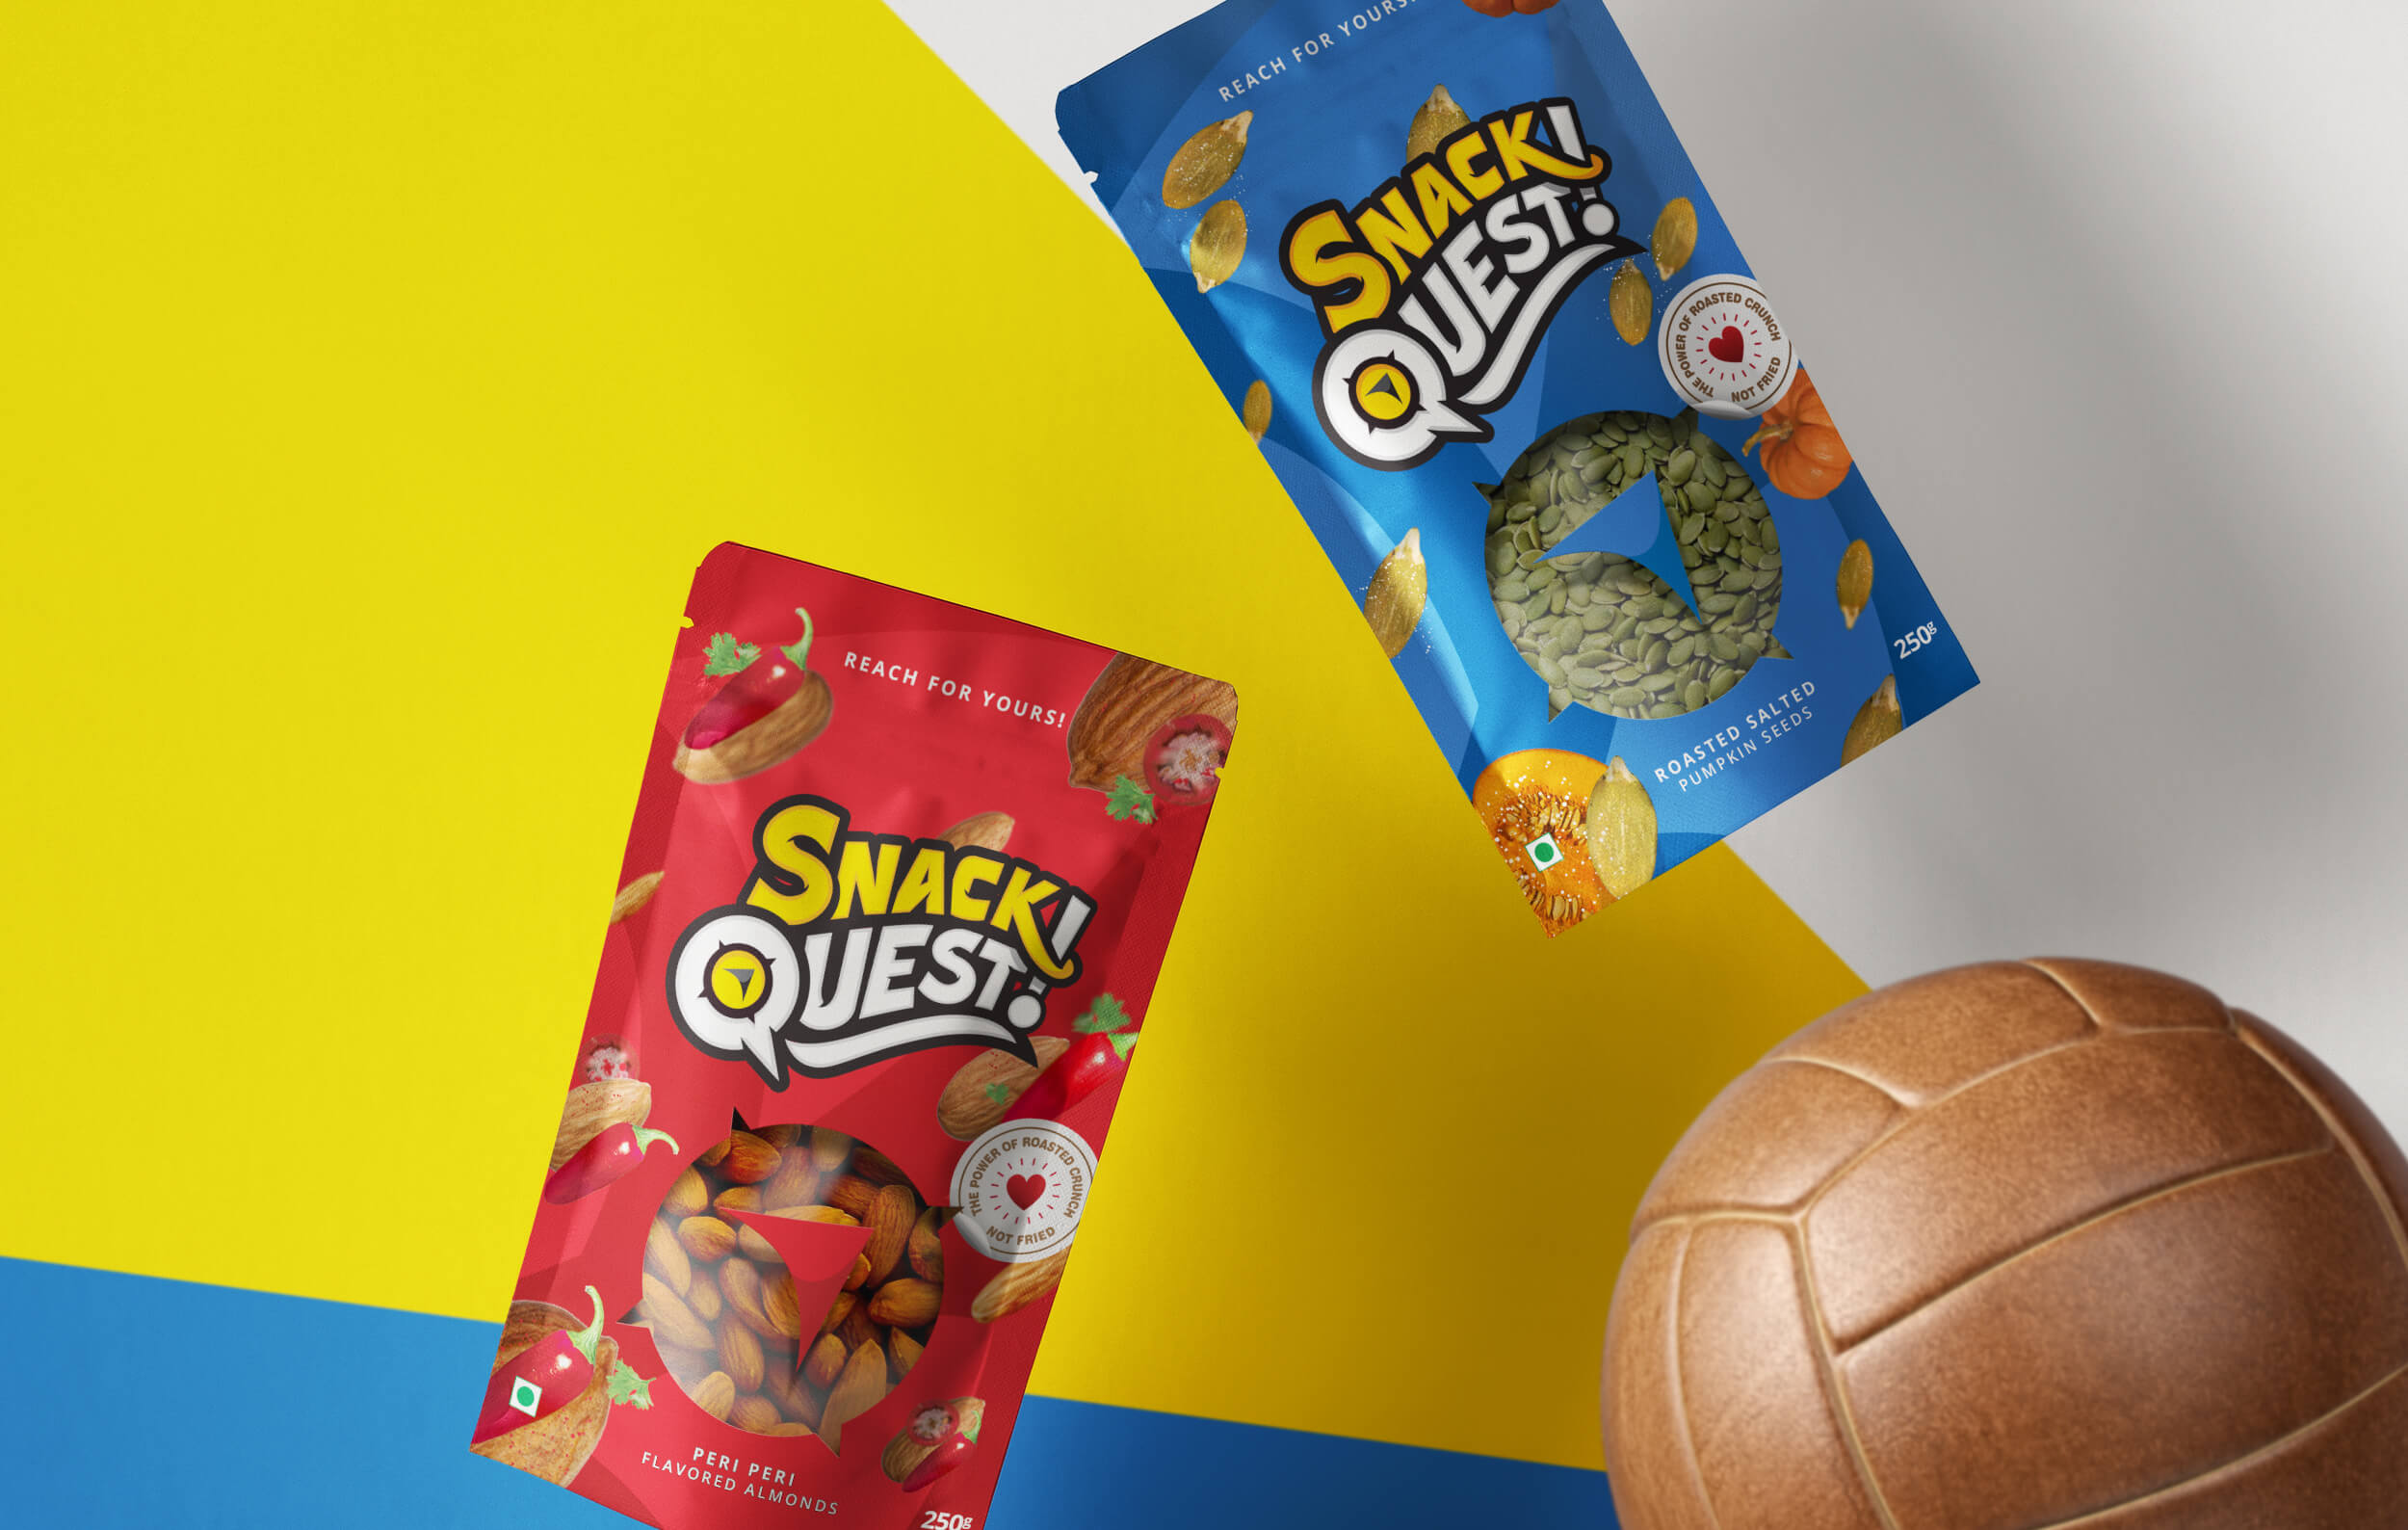 Snack-Quest-brand-identity-packaging-design-by-Artisticodopeo-Designz(2).jpg Image